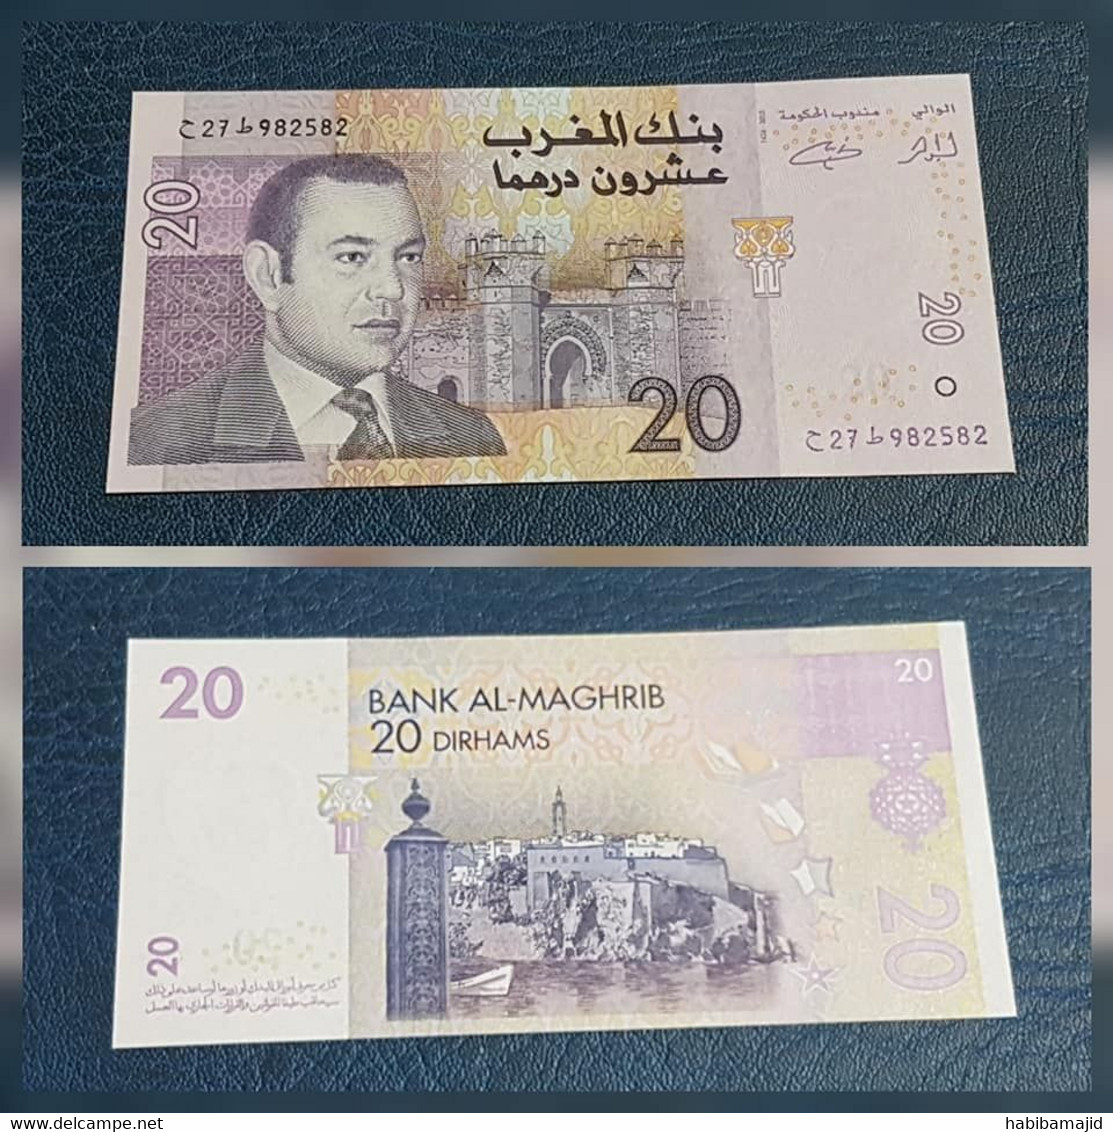 MAROC - Billet De 20 DIRHAMS - Mohammed VI - 2005 "UNC" - N° De Série : 27/982582 - Billet Retirer De La Circulation - - Marocco